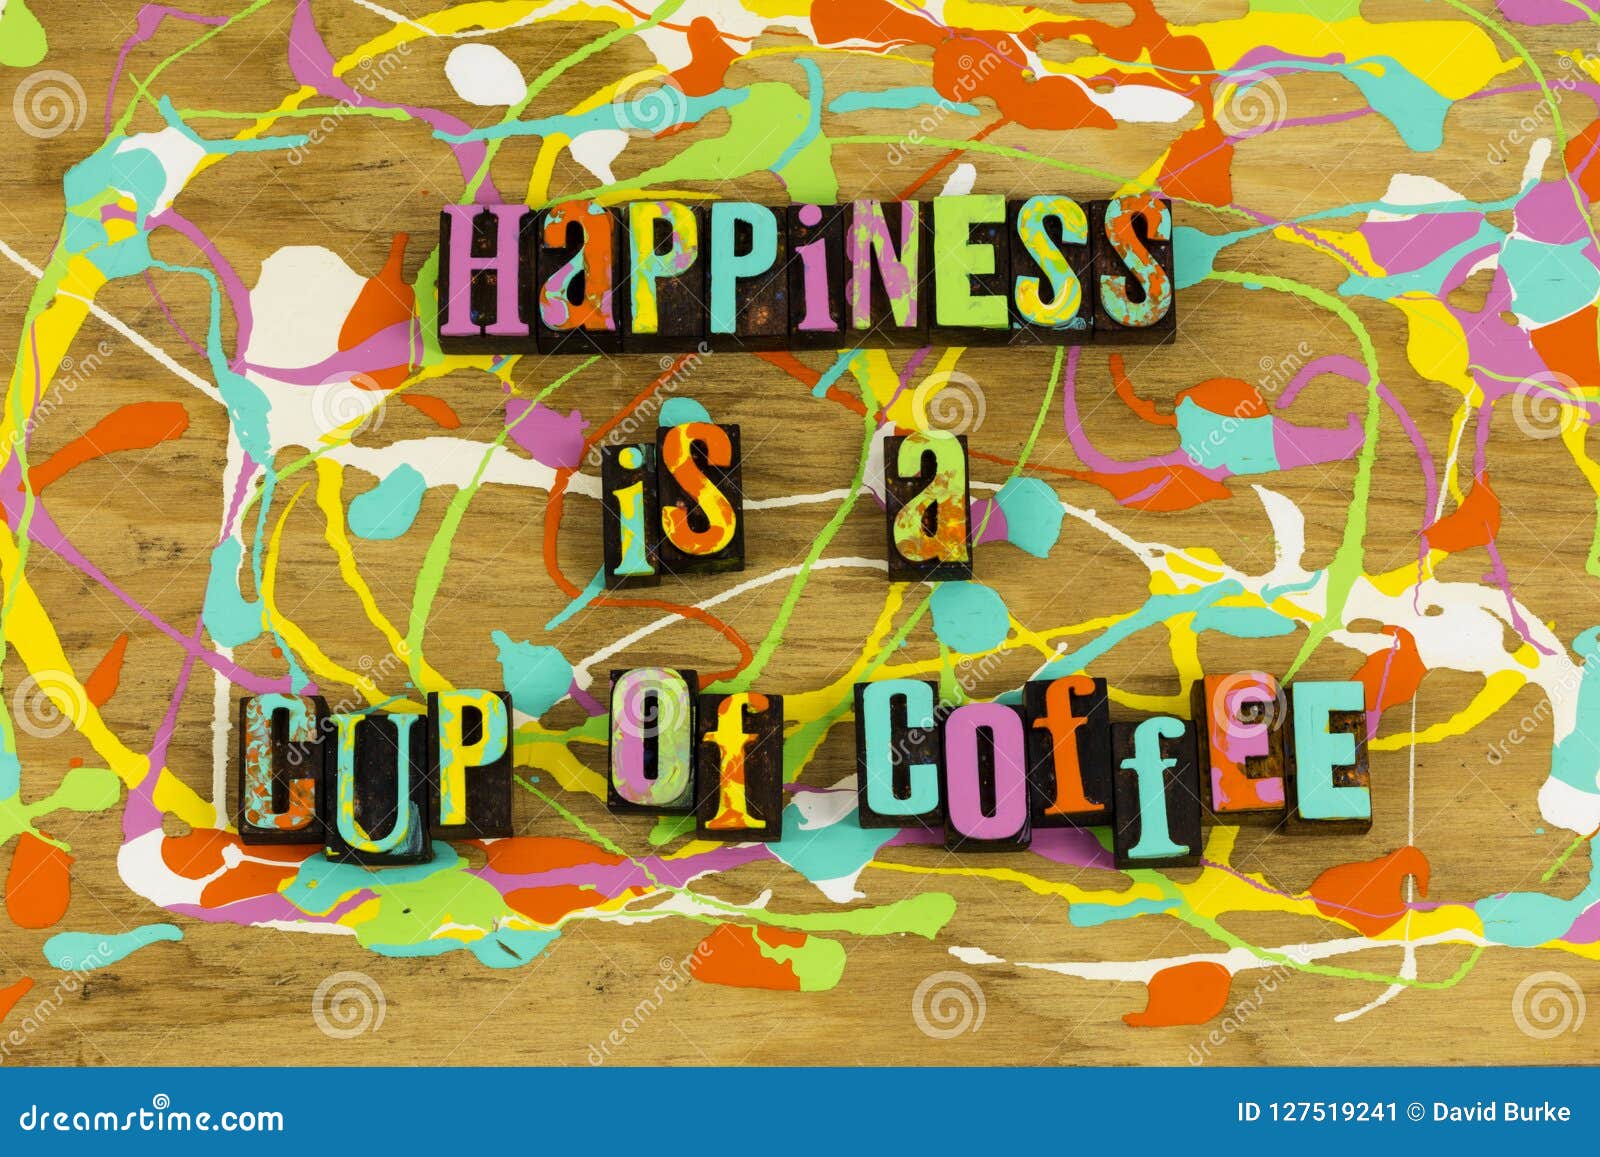 happiness happy friends enjoyment coffee social conversation